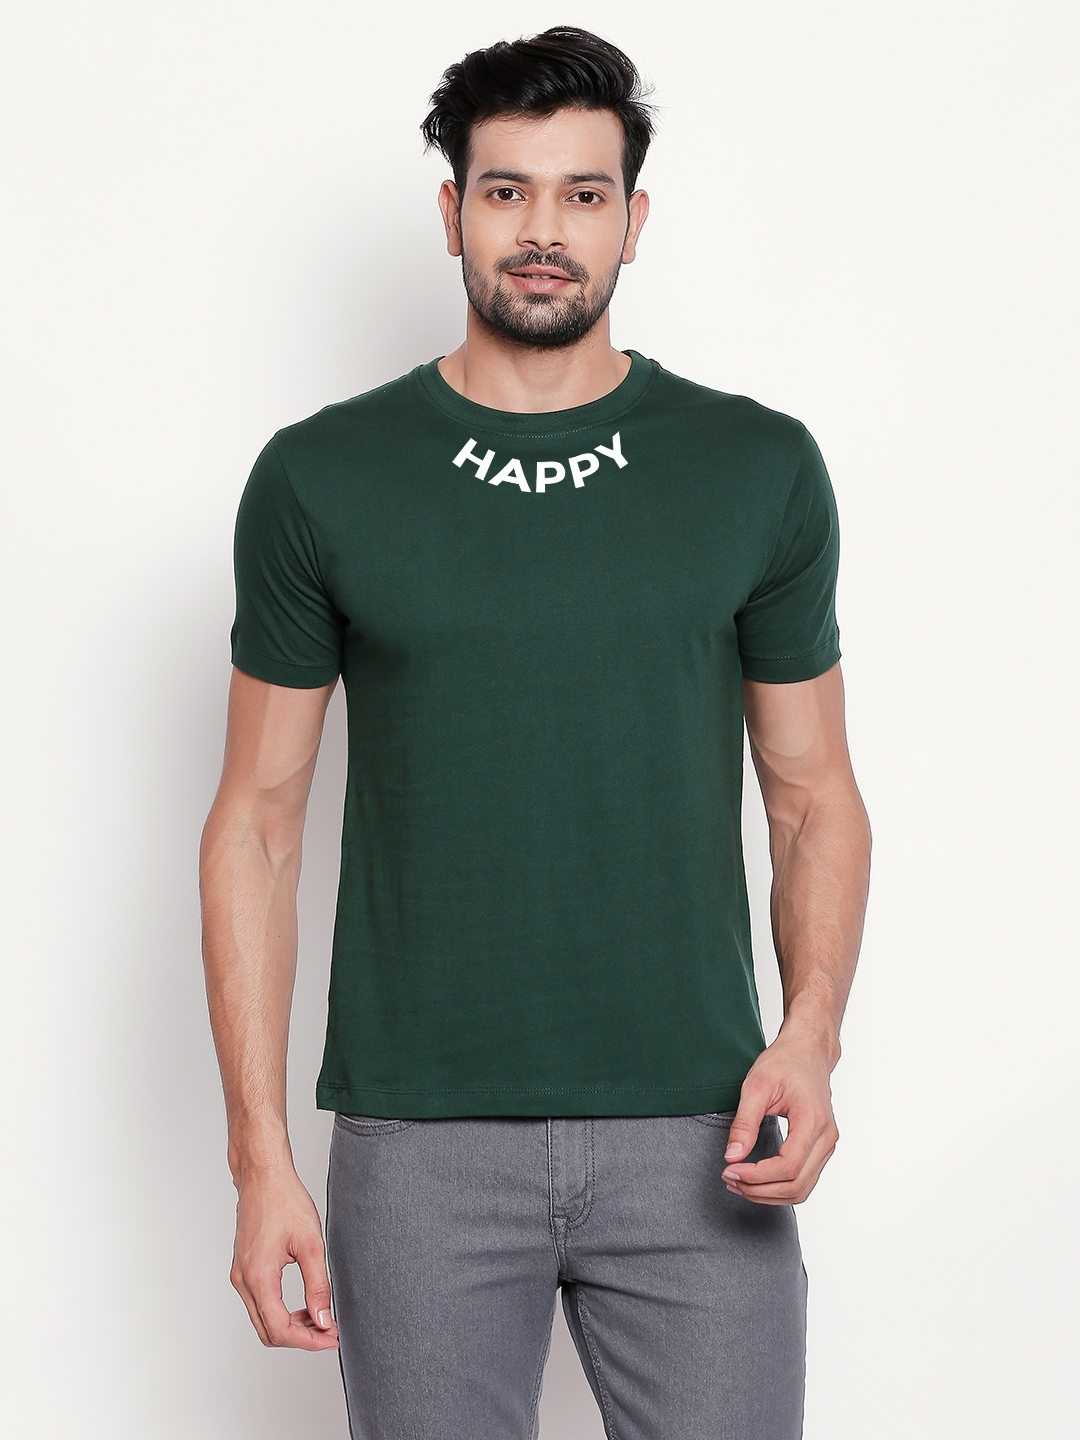 creativeideas.store | Happy Green Tshirt